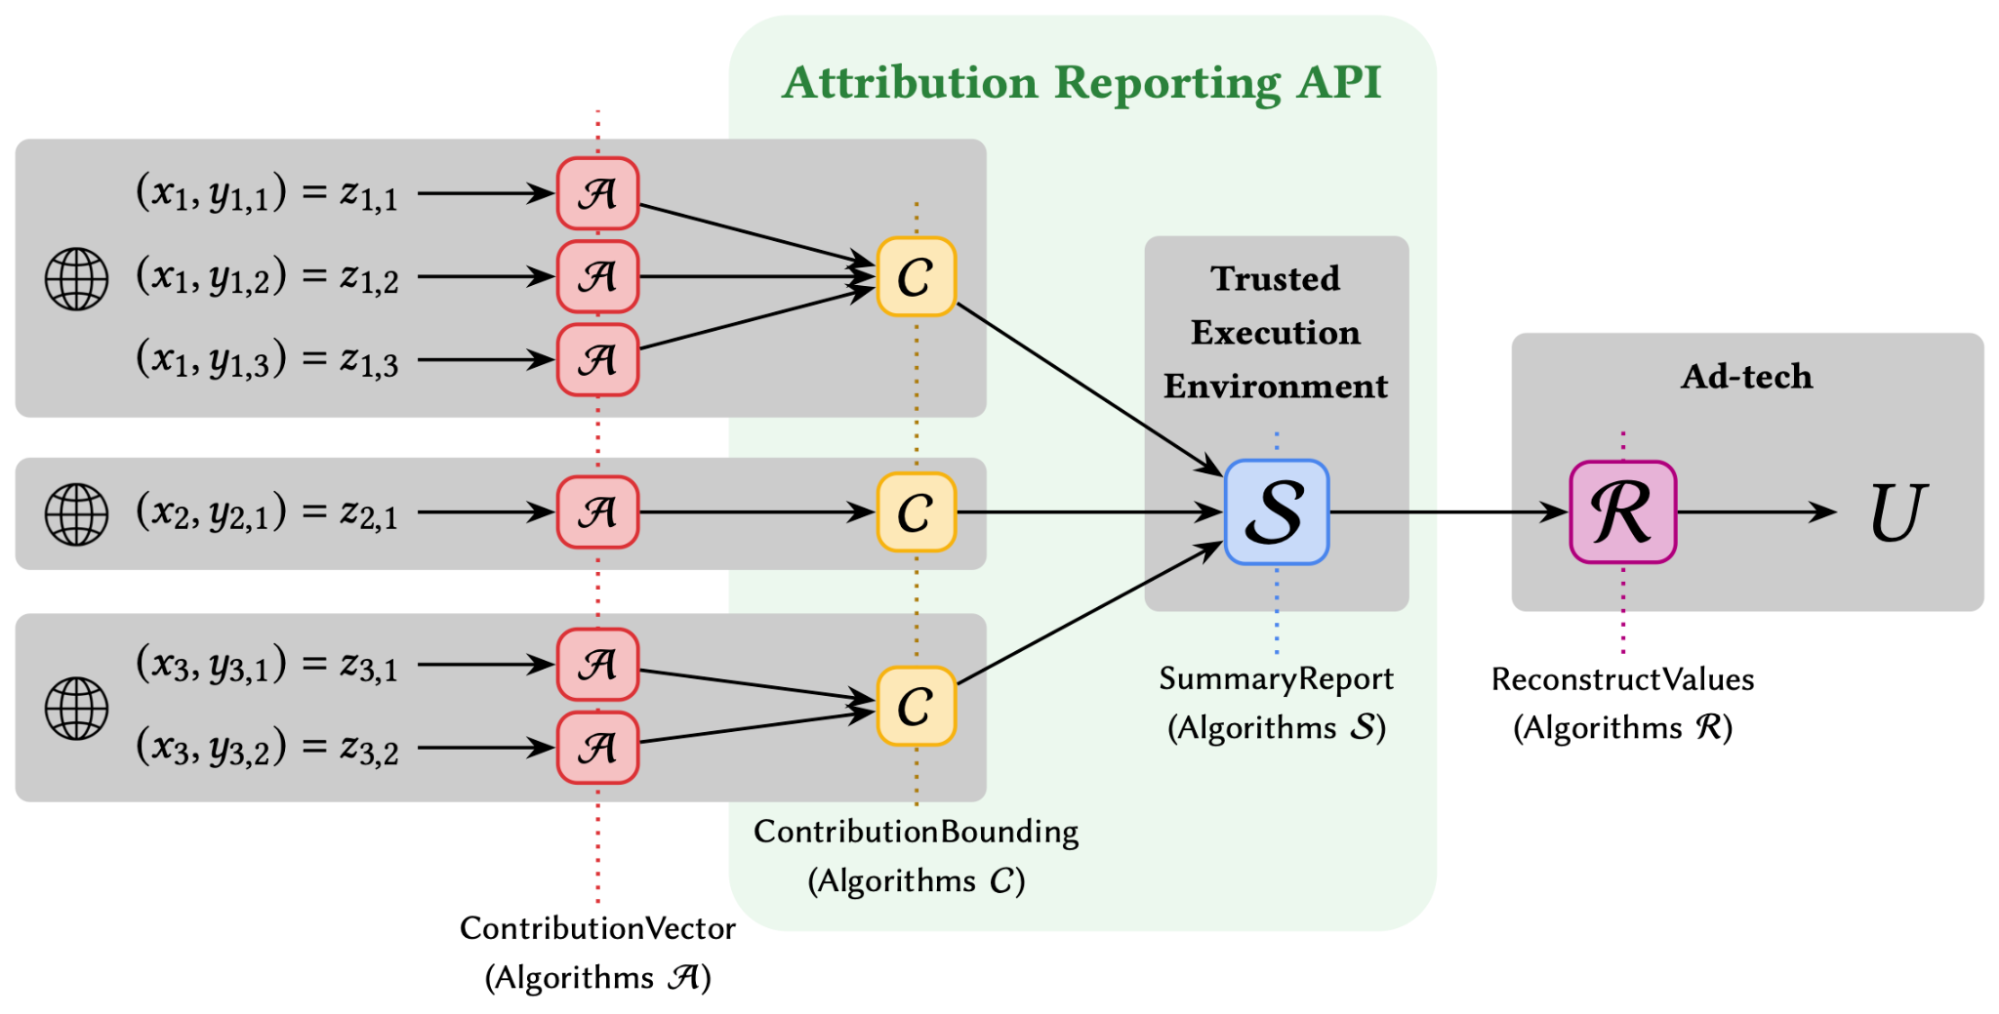 Illustrative usage of ARA summary reports